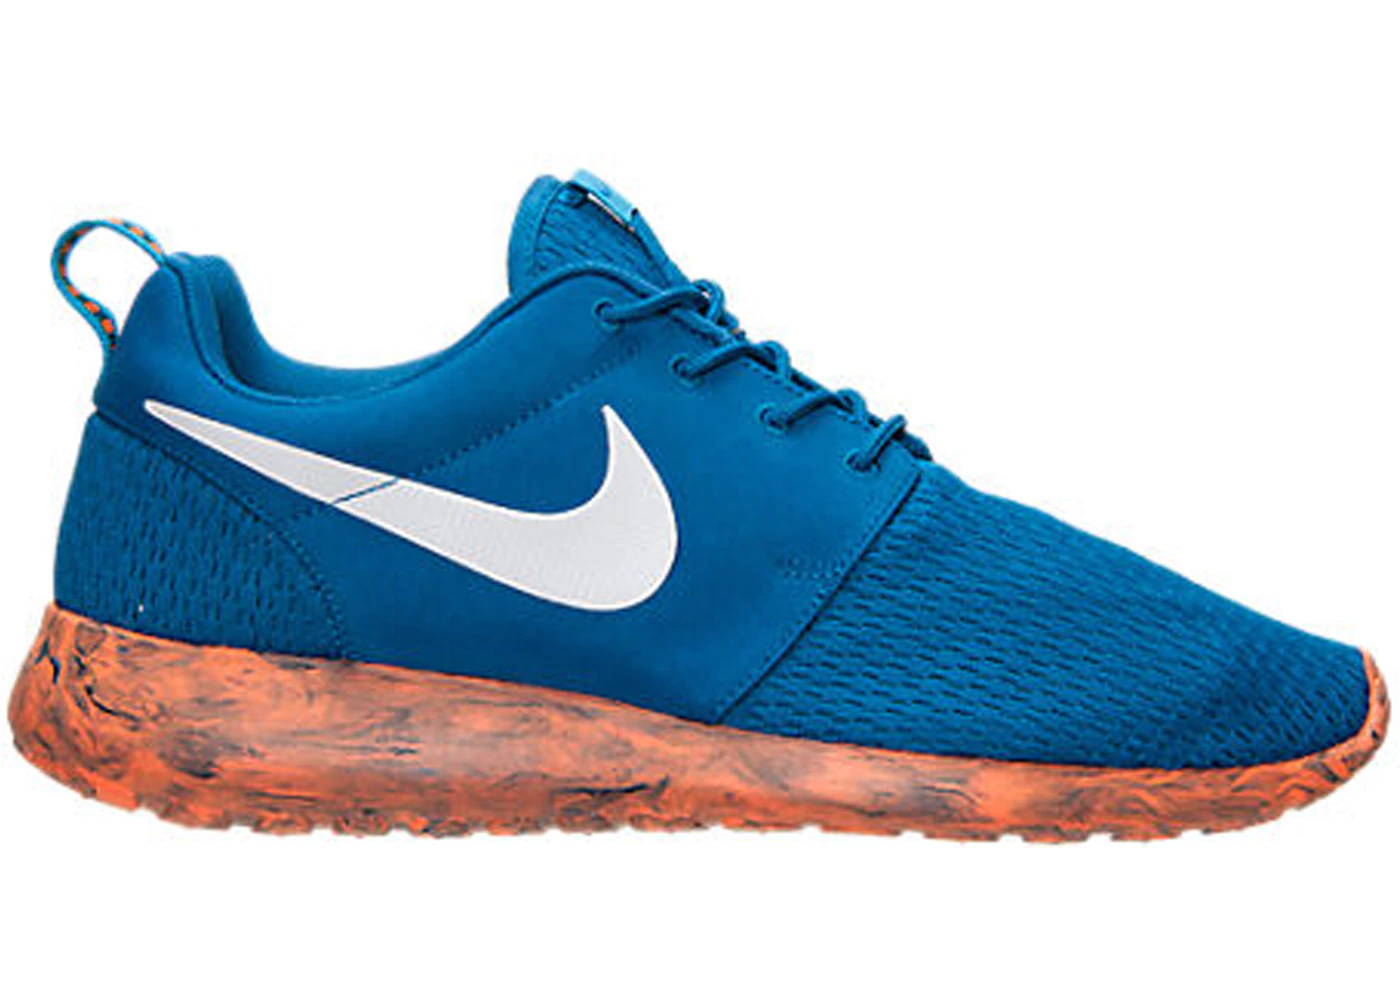 Nike Roshe Run Marble Military Blue Orange - 669985-400 - US